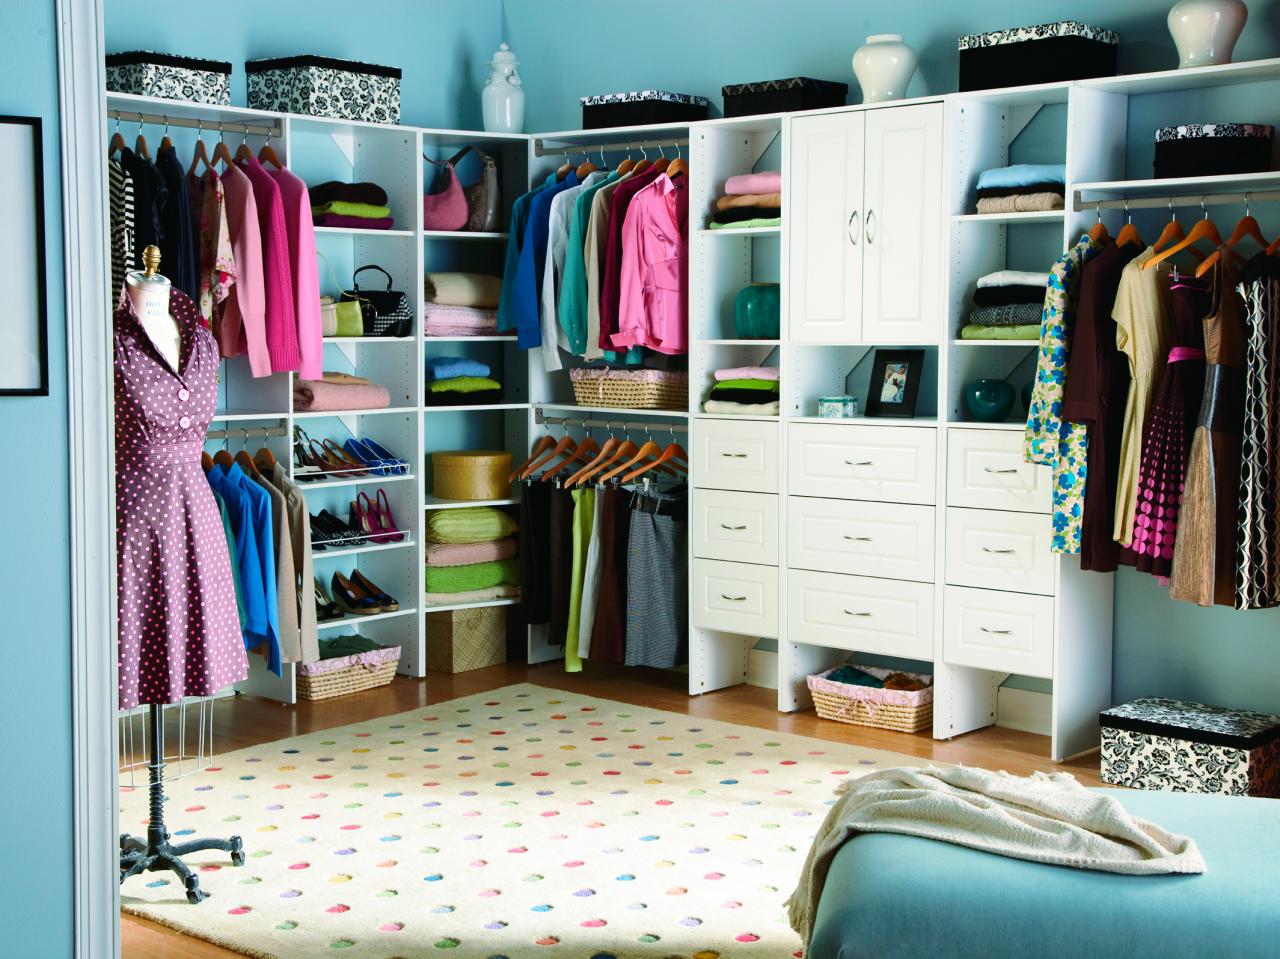 Popular Must Have Closet Organization Ideas  Organizing walk in closet,  Best closet organization, Closet room organizer